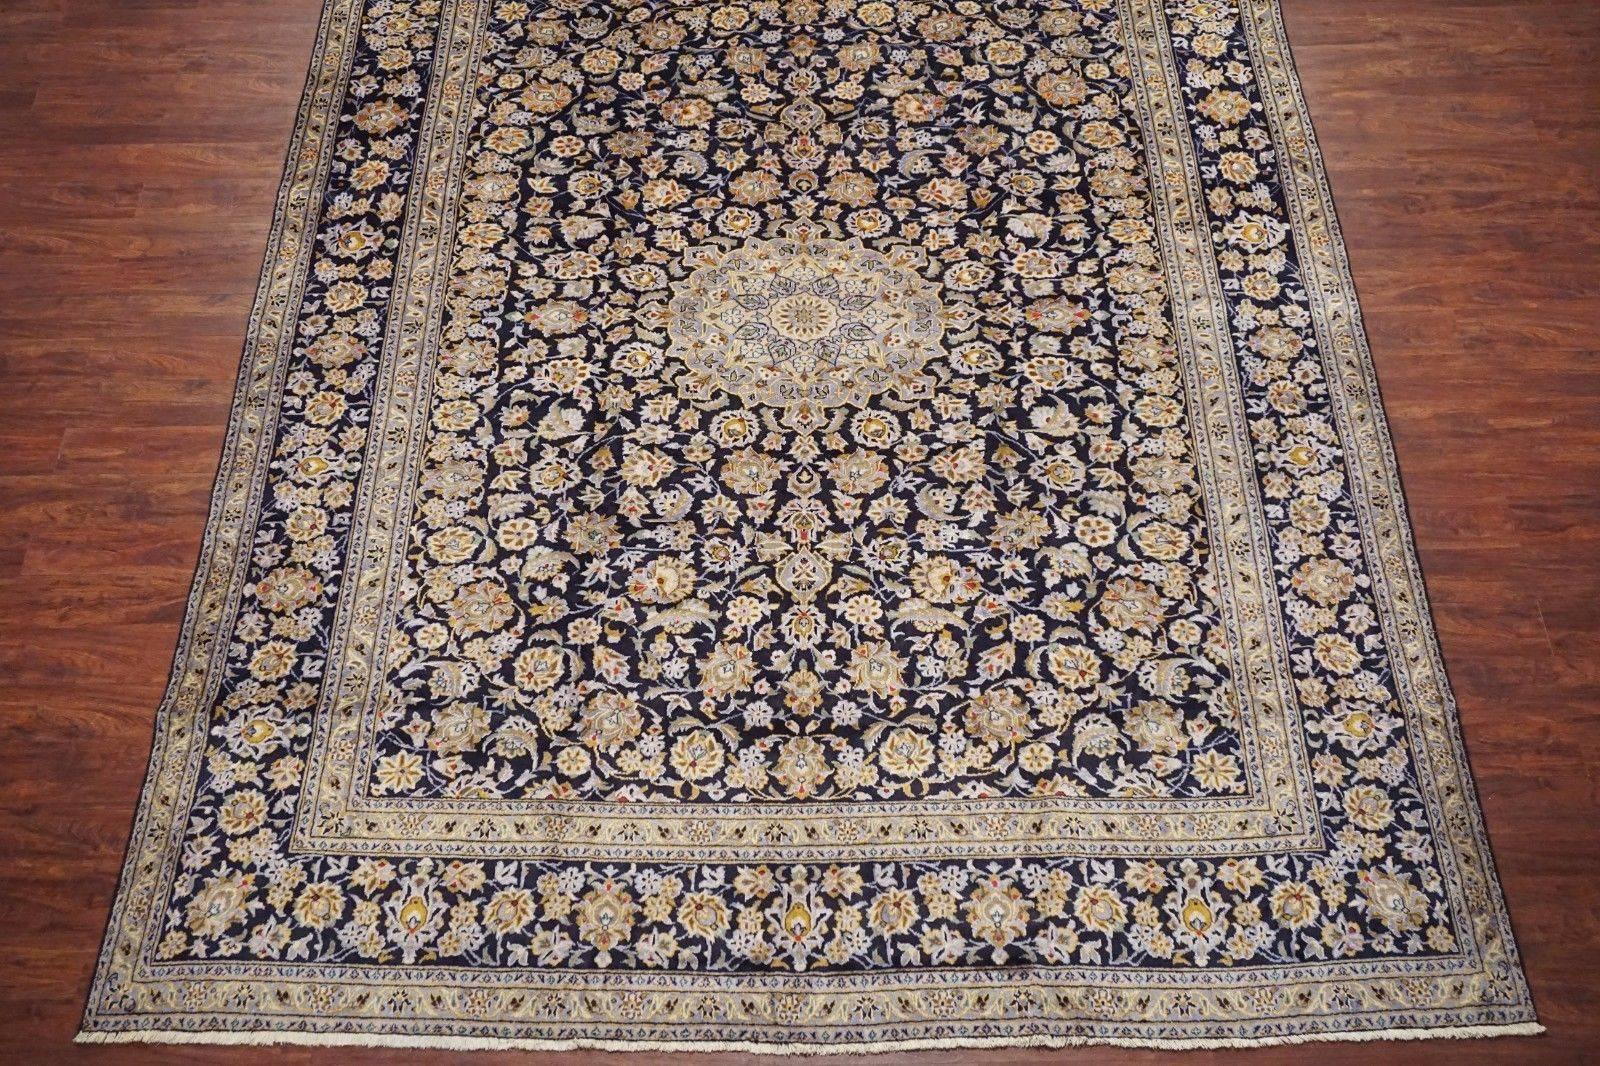 Signed blue Persian Kashan rug

circa 1940

Measures: 9'11